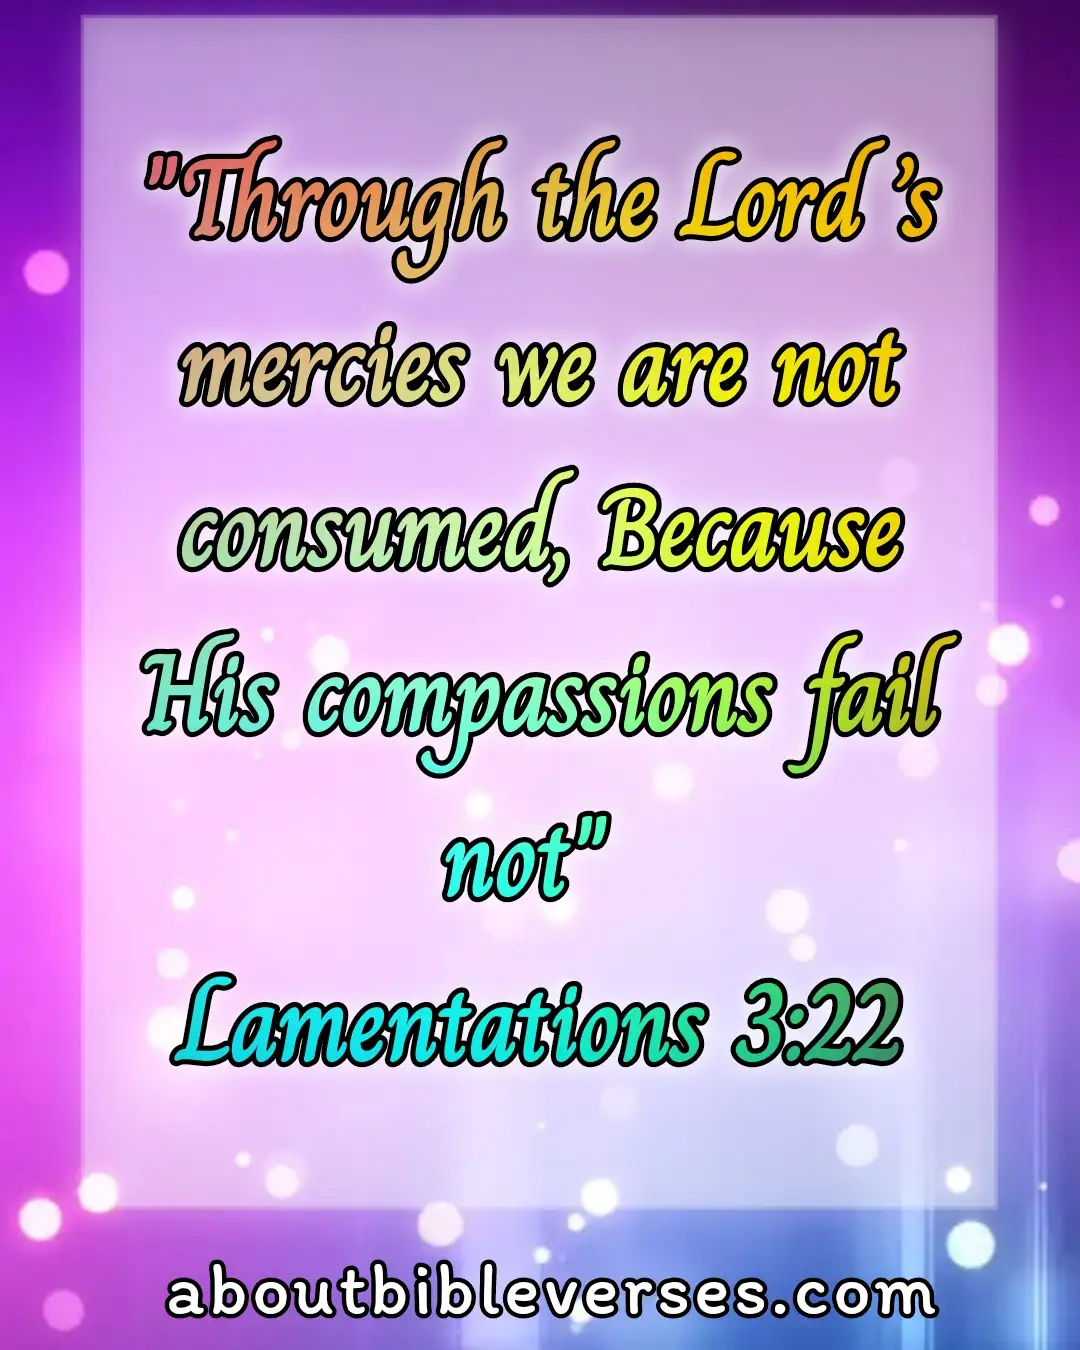 today bible verse (Lamentations 3:22)